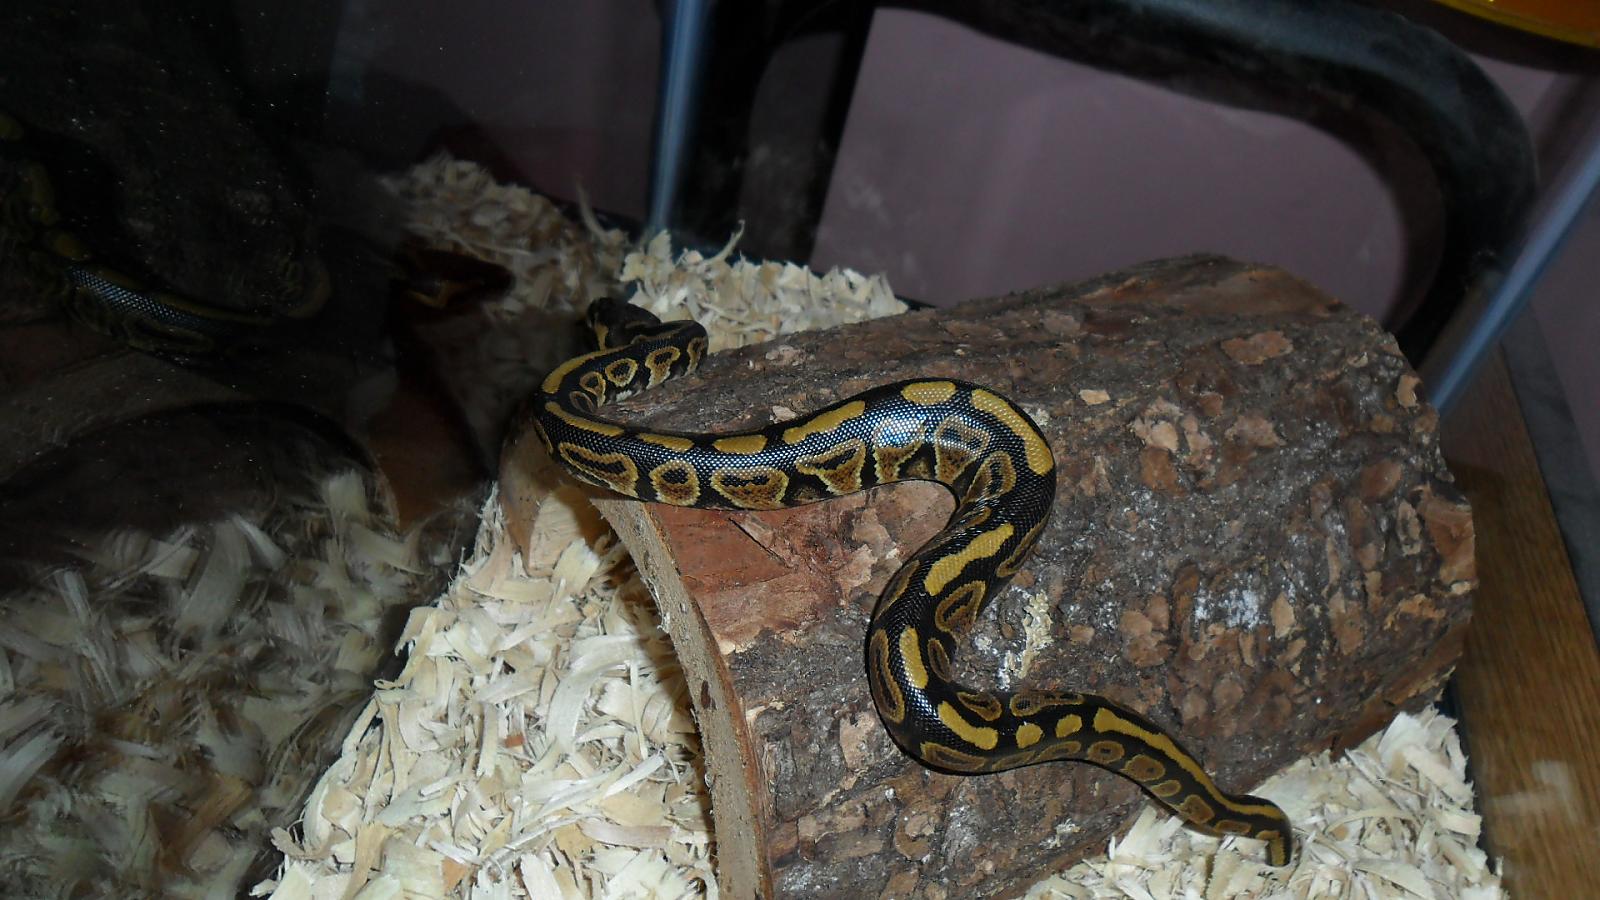 My newest snake Kira